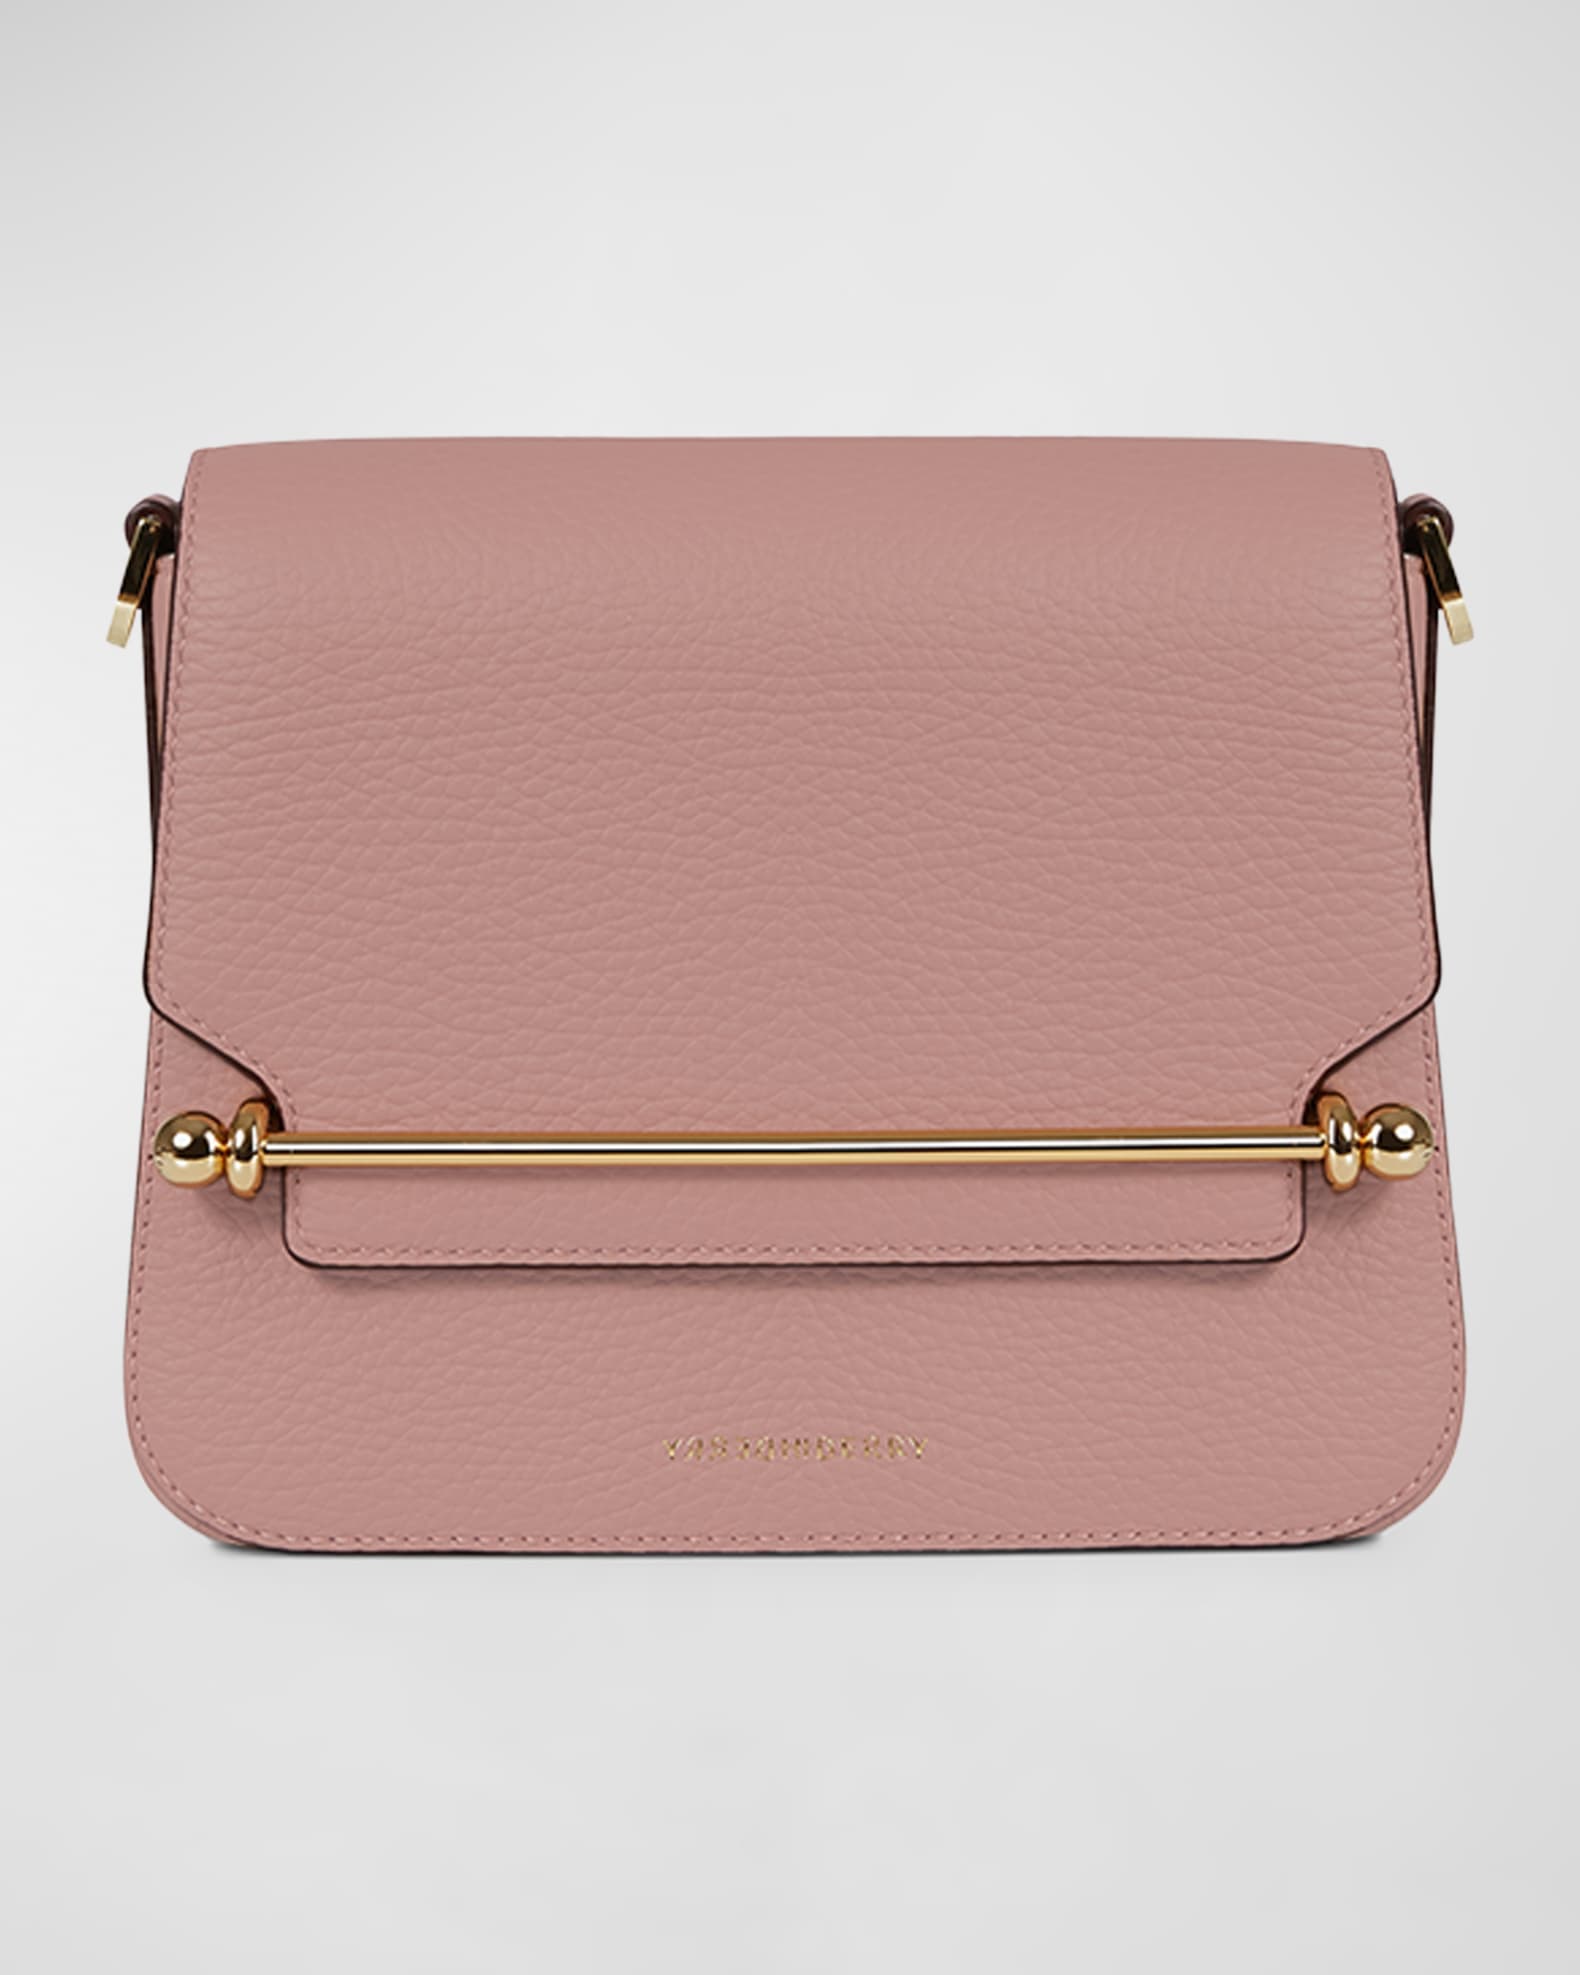 Strathberry - Ace Mini - Crossbody Leather Mini Handbag - Pink for